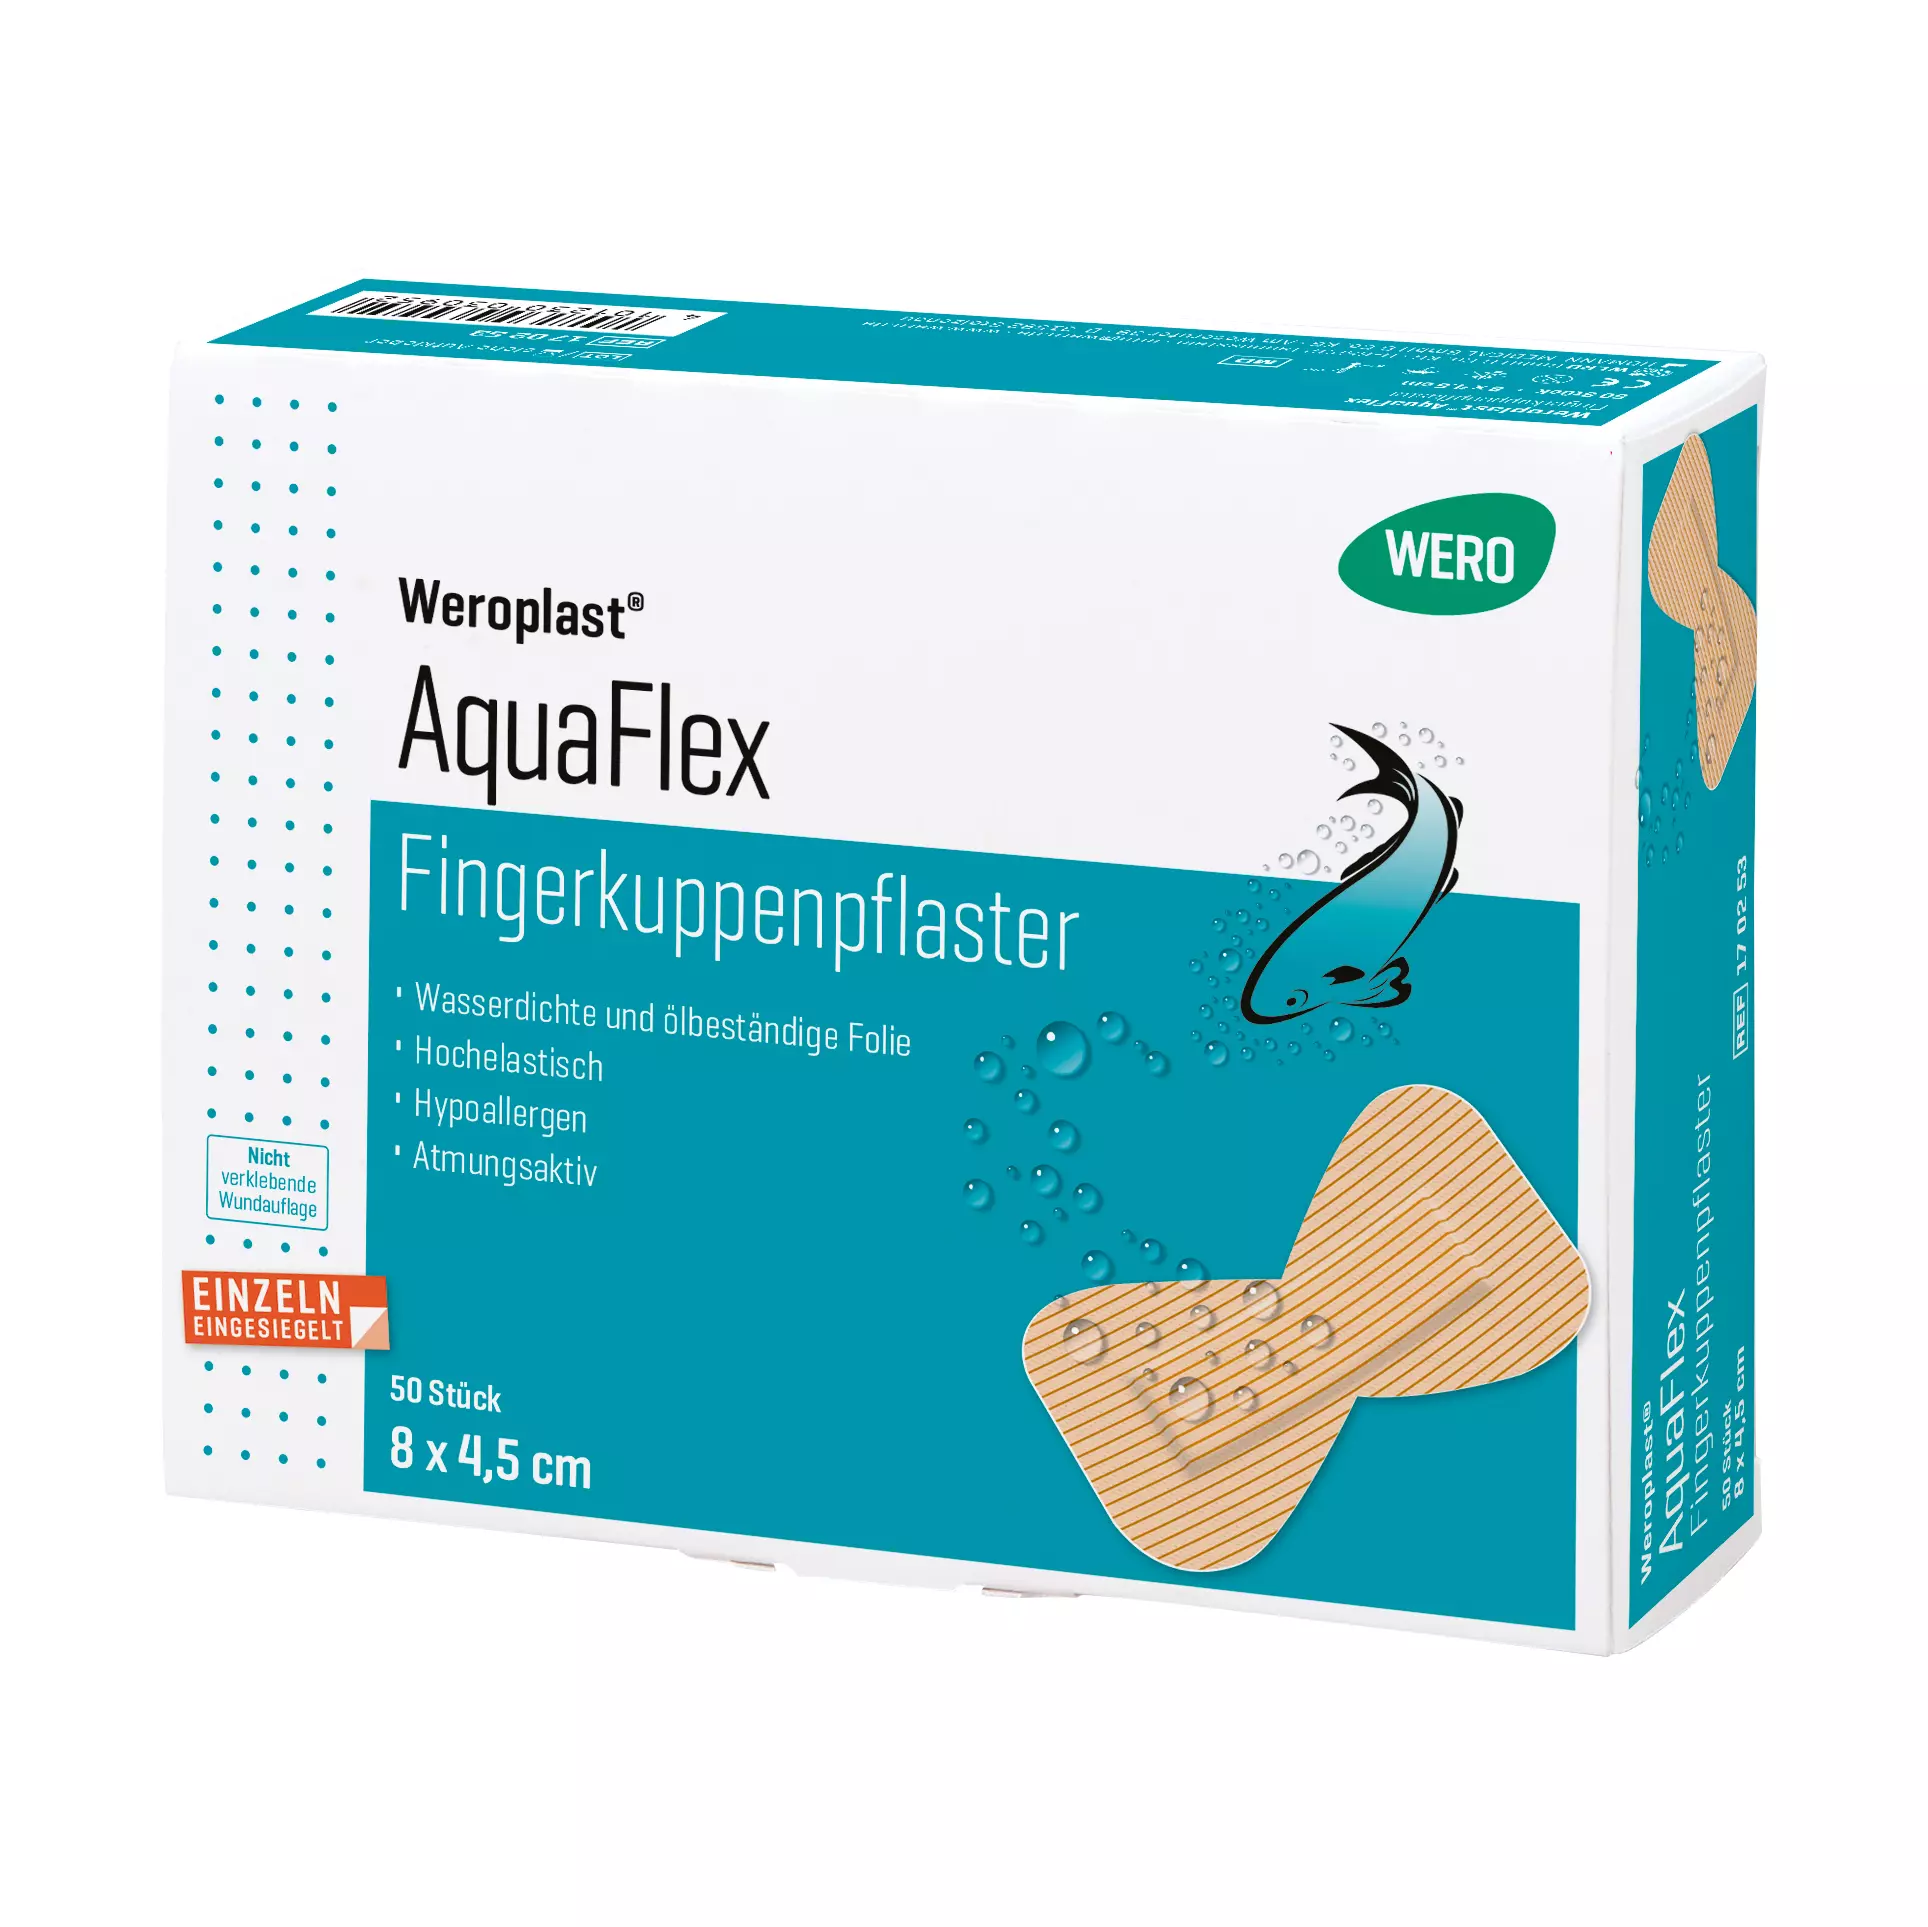 Weroplast® AquaFlex fingertip plasters